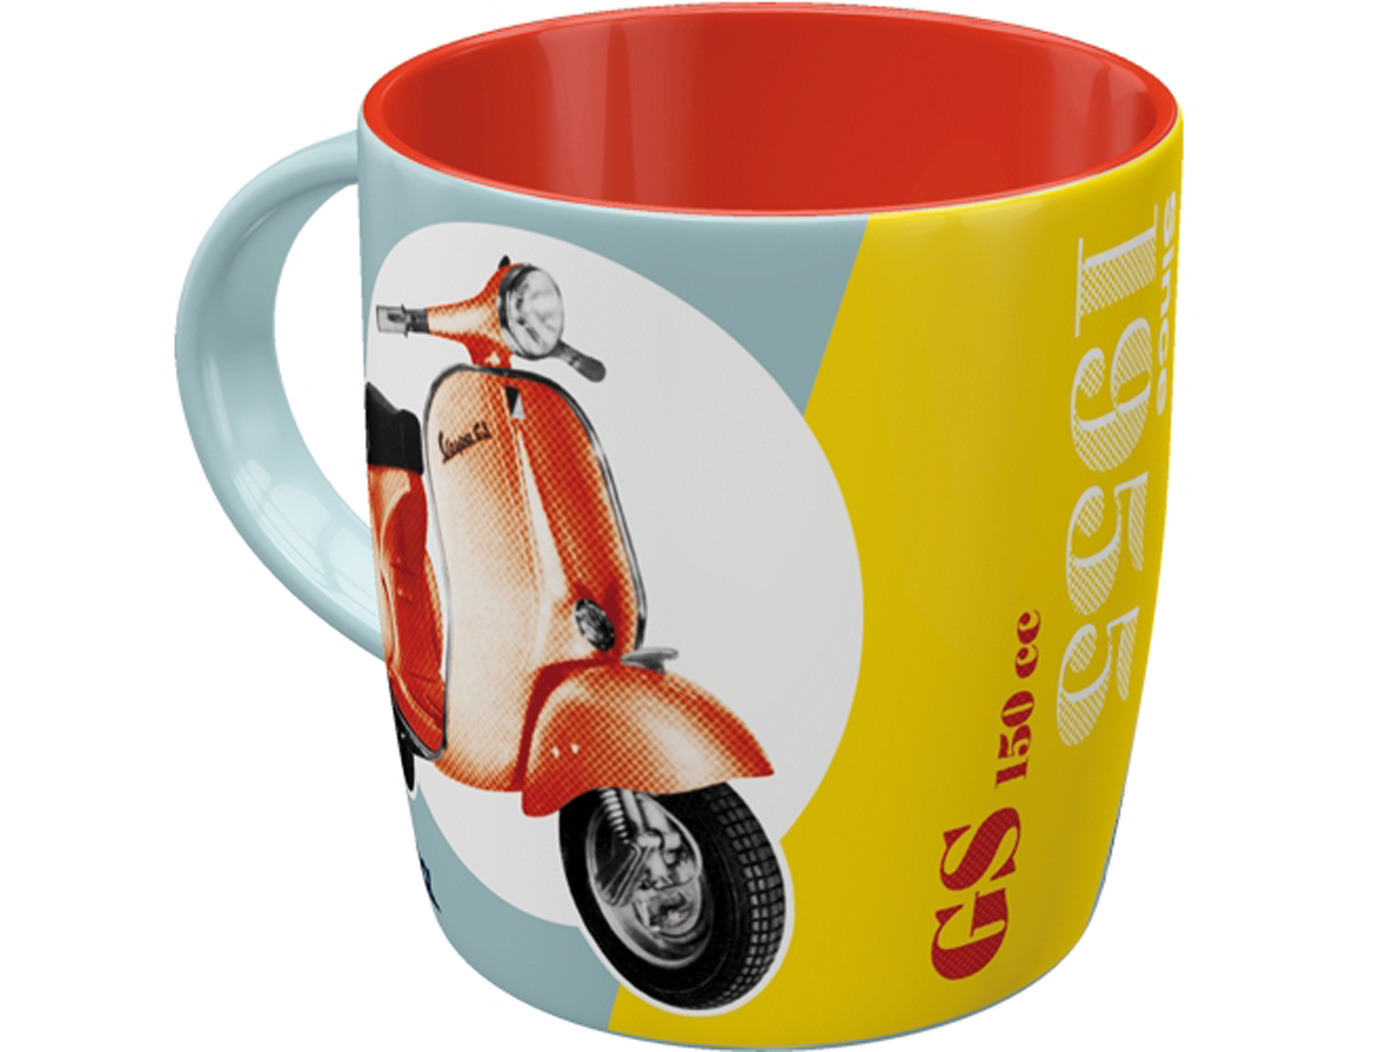 Mug Vespa "GS 150 Since 1955" Perfect for a gift